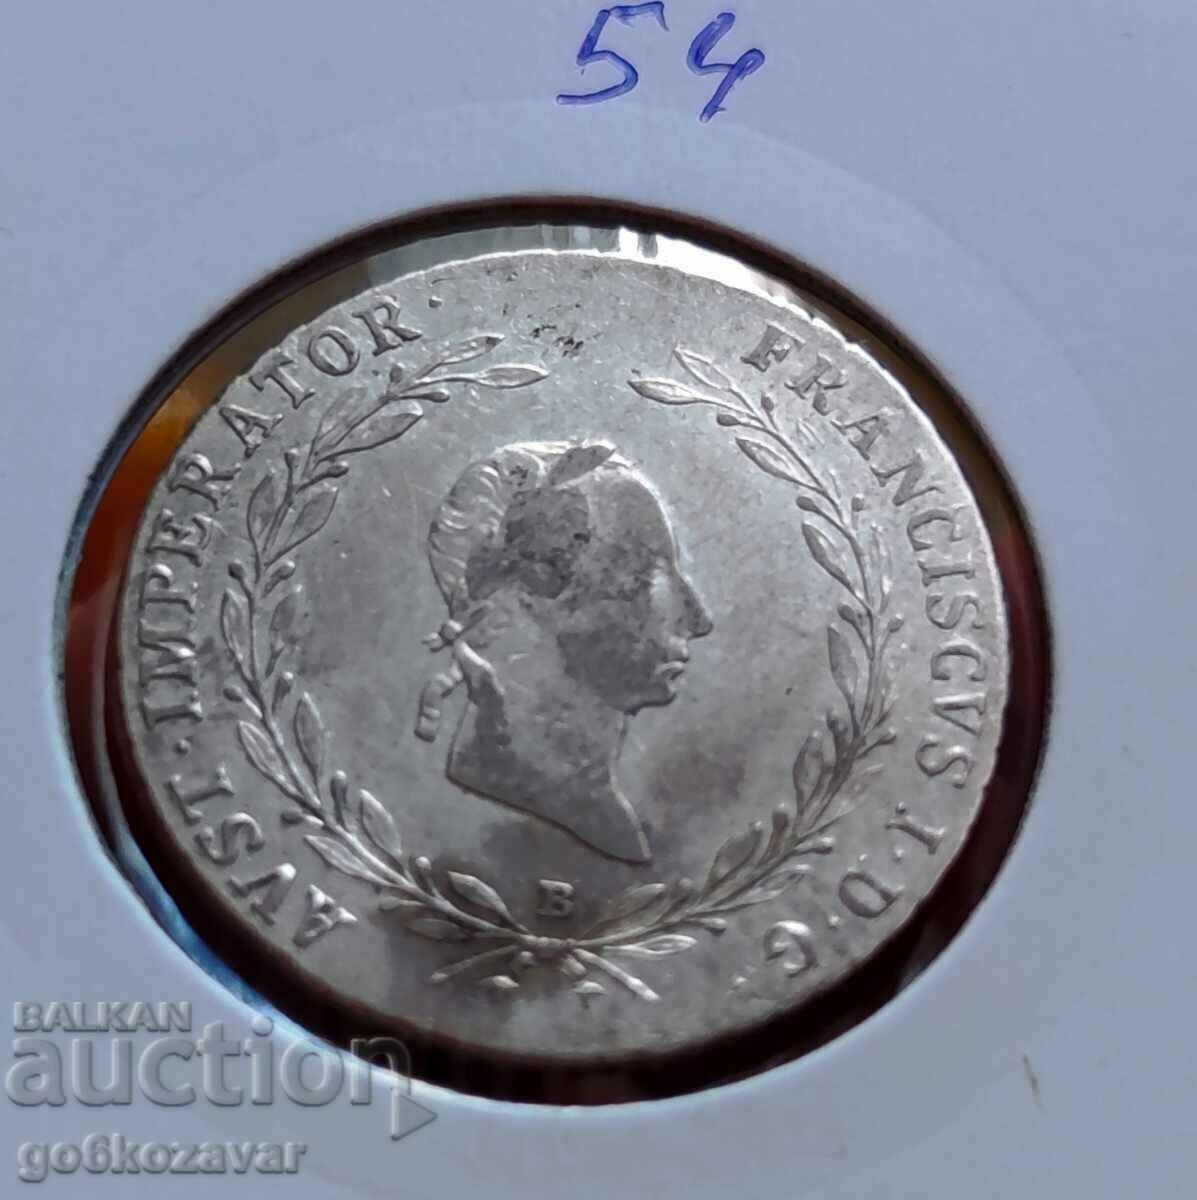 Moneda de top de argint Austria 20 Kreuzer 1827!